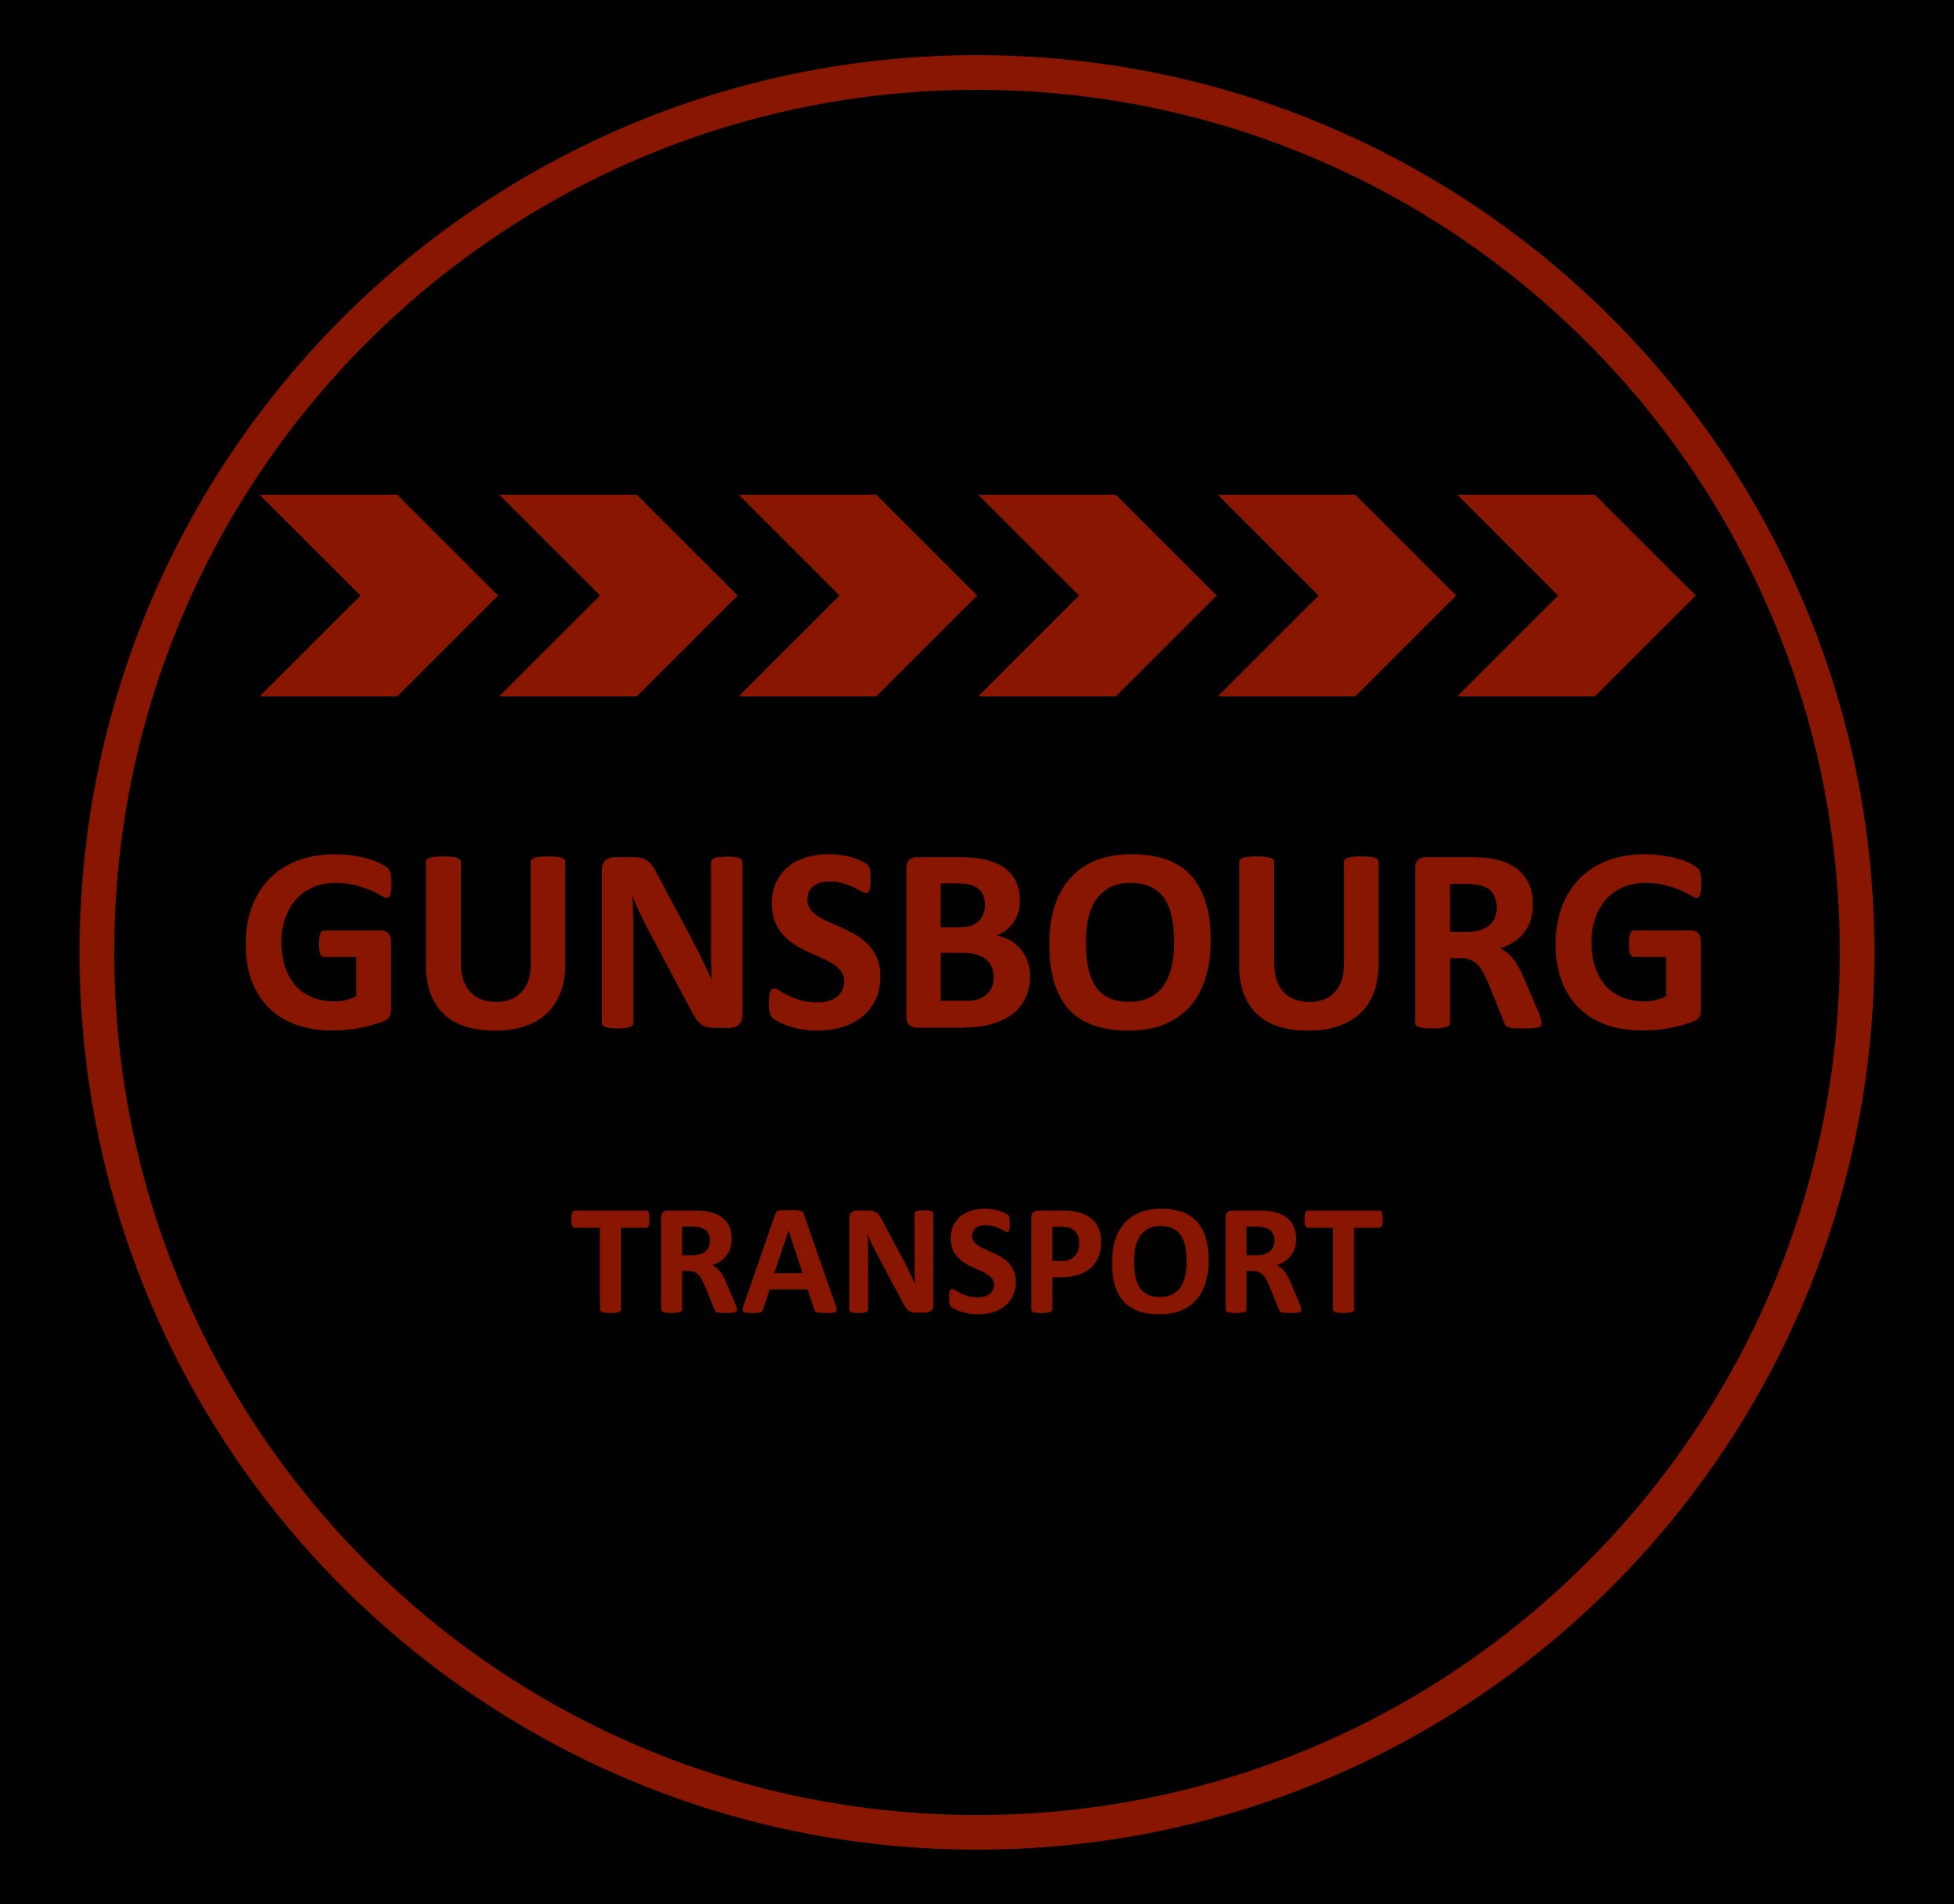 "GUNSBOURG TRANSPORT"